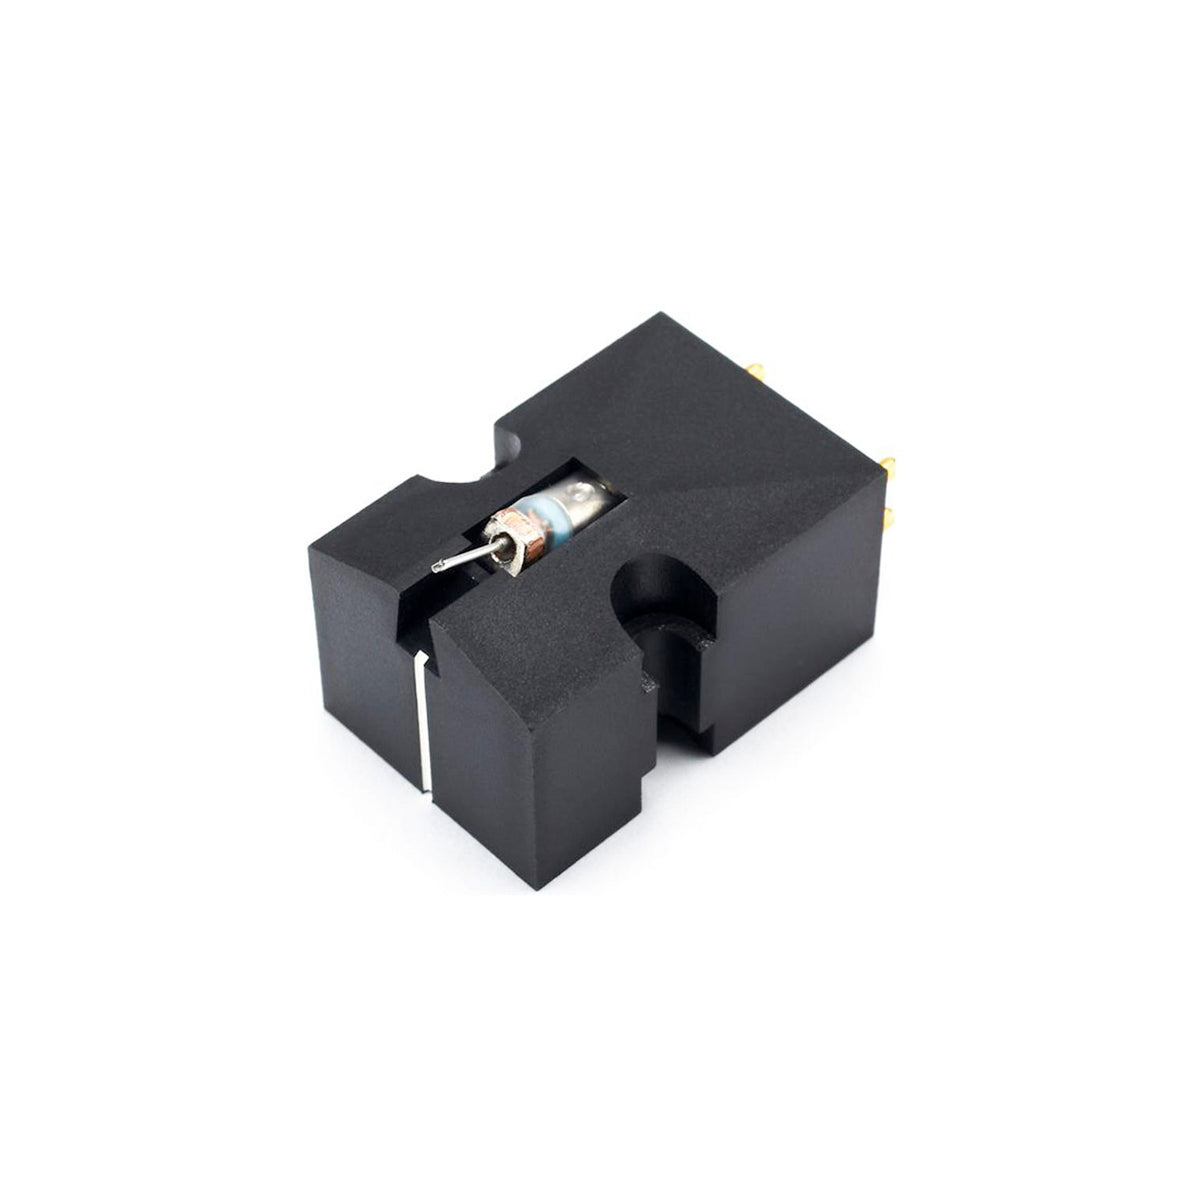 Denon DL103 Moving Coil (MC) Cartridge - The Audio Experts